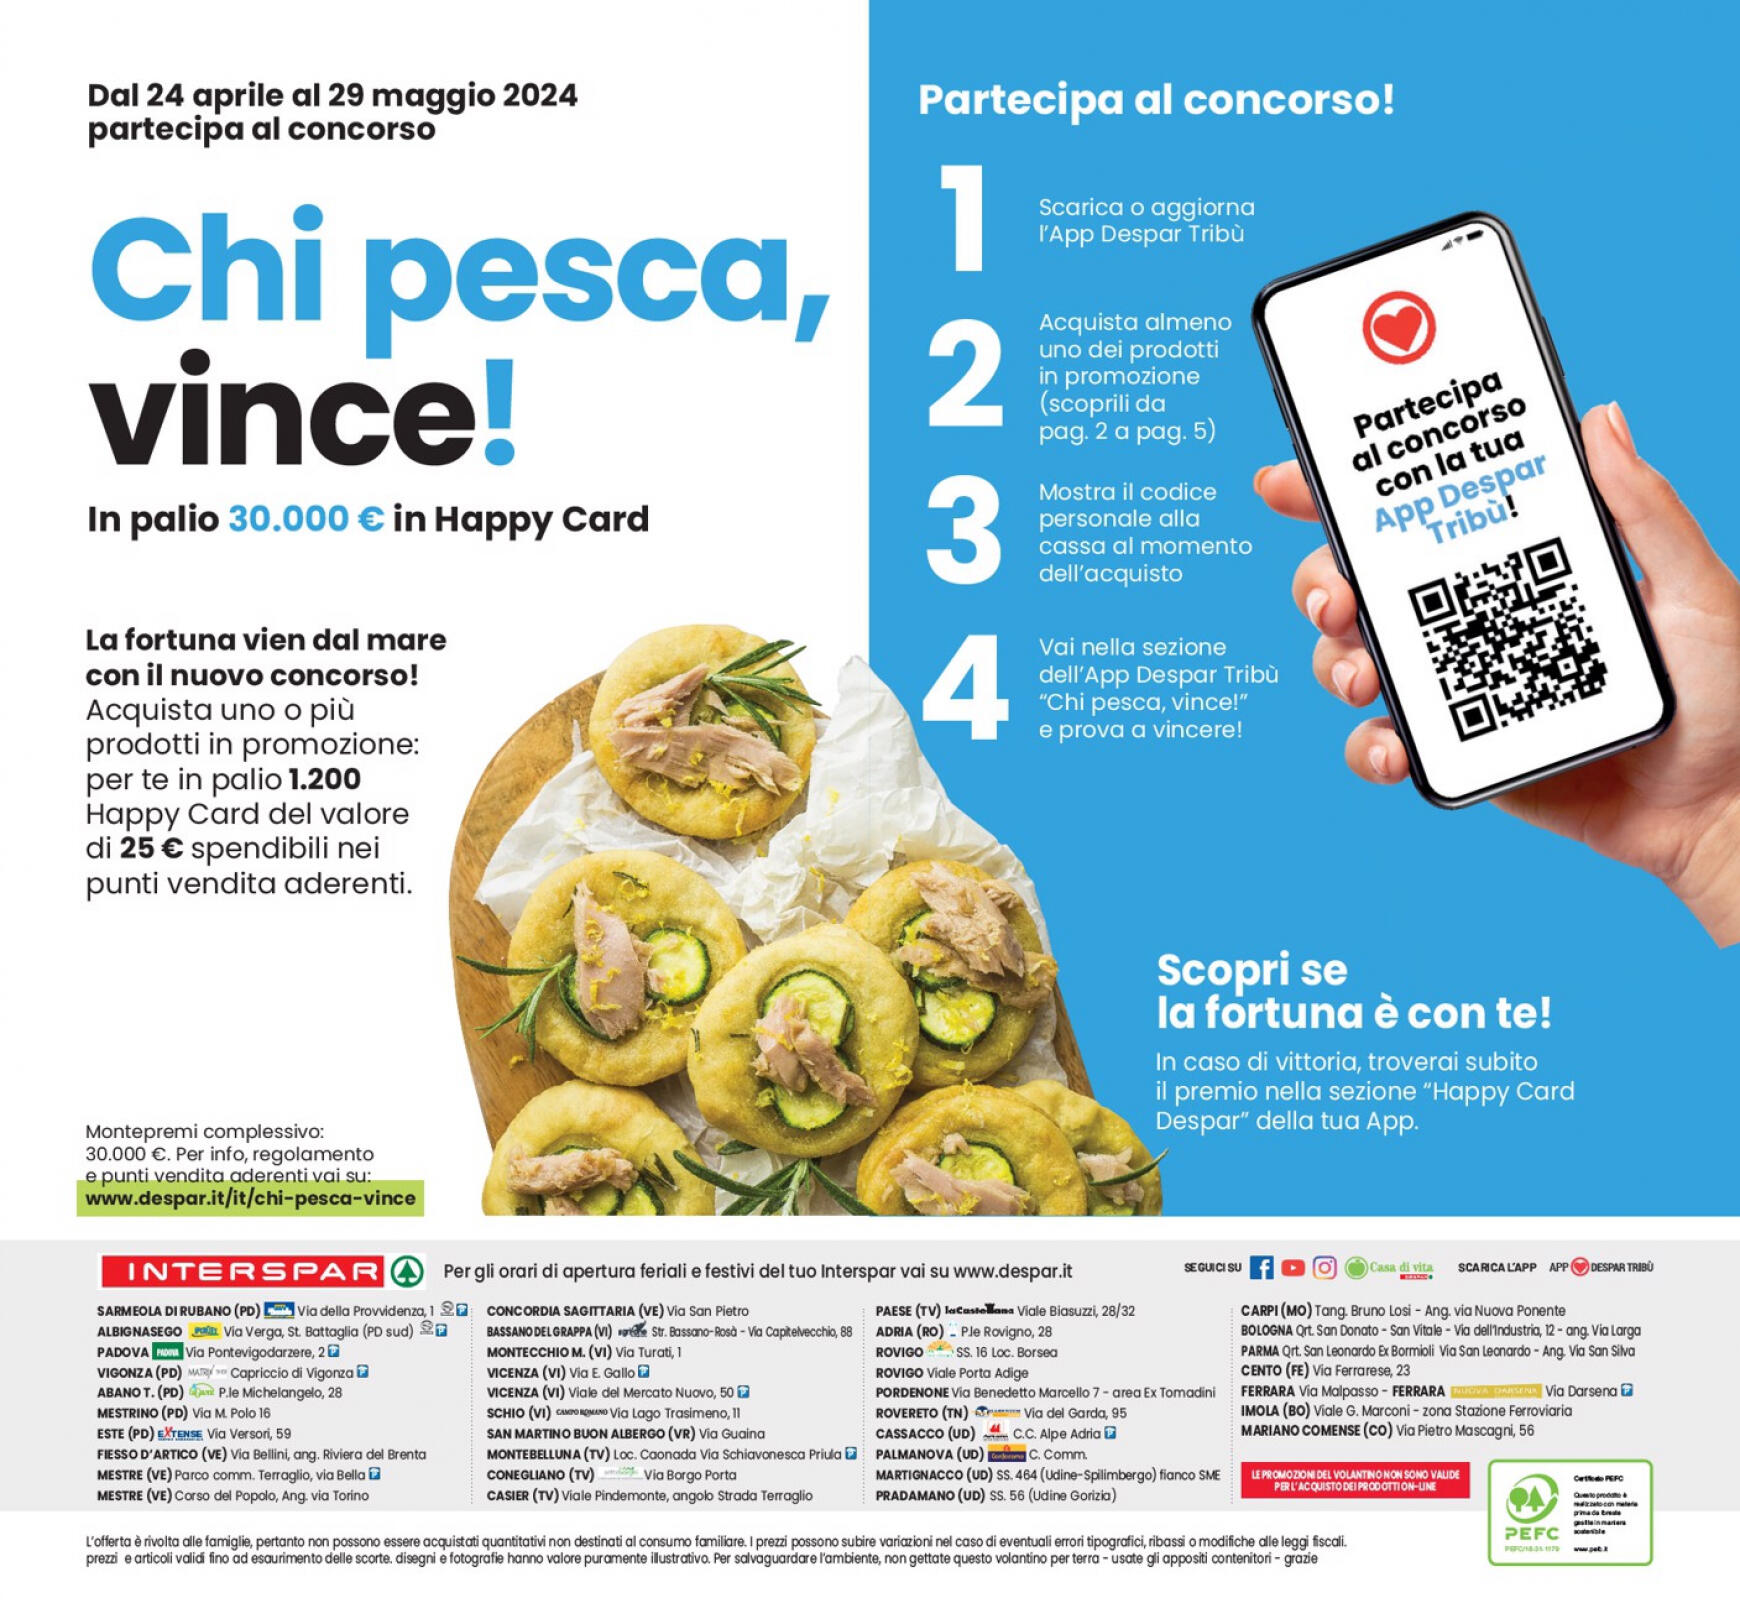 interspar - Nuovo volantino INTERSPAR - Sapore d'estate 24.04. - 08.05. - page: 16